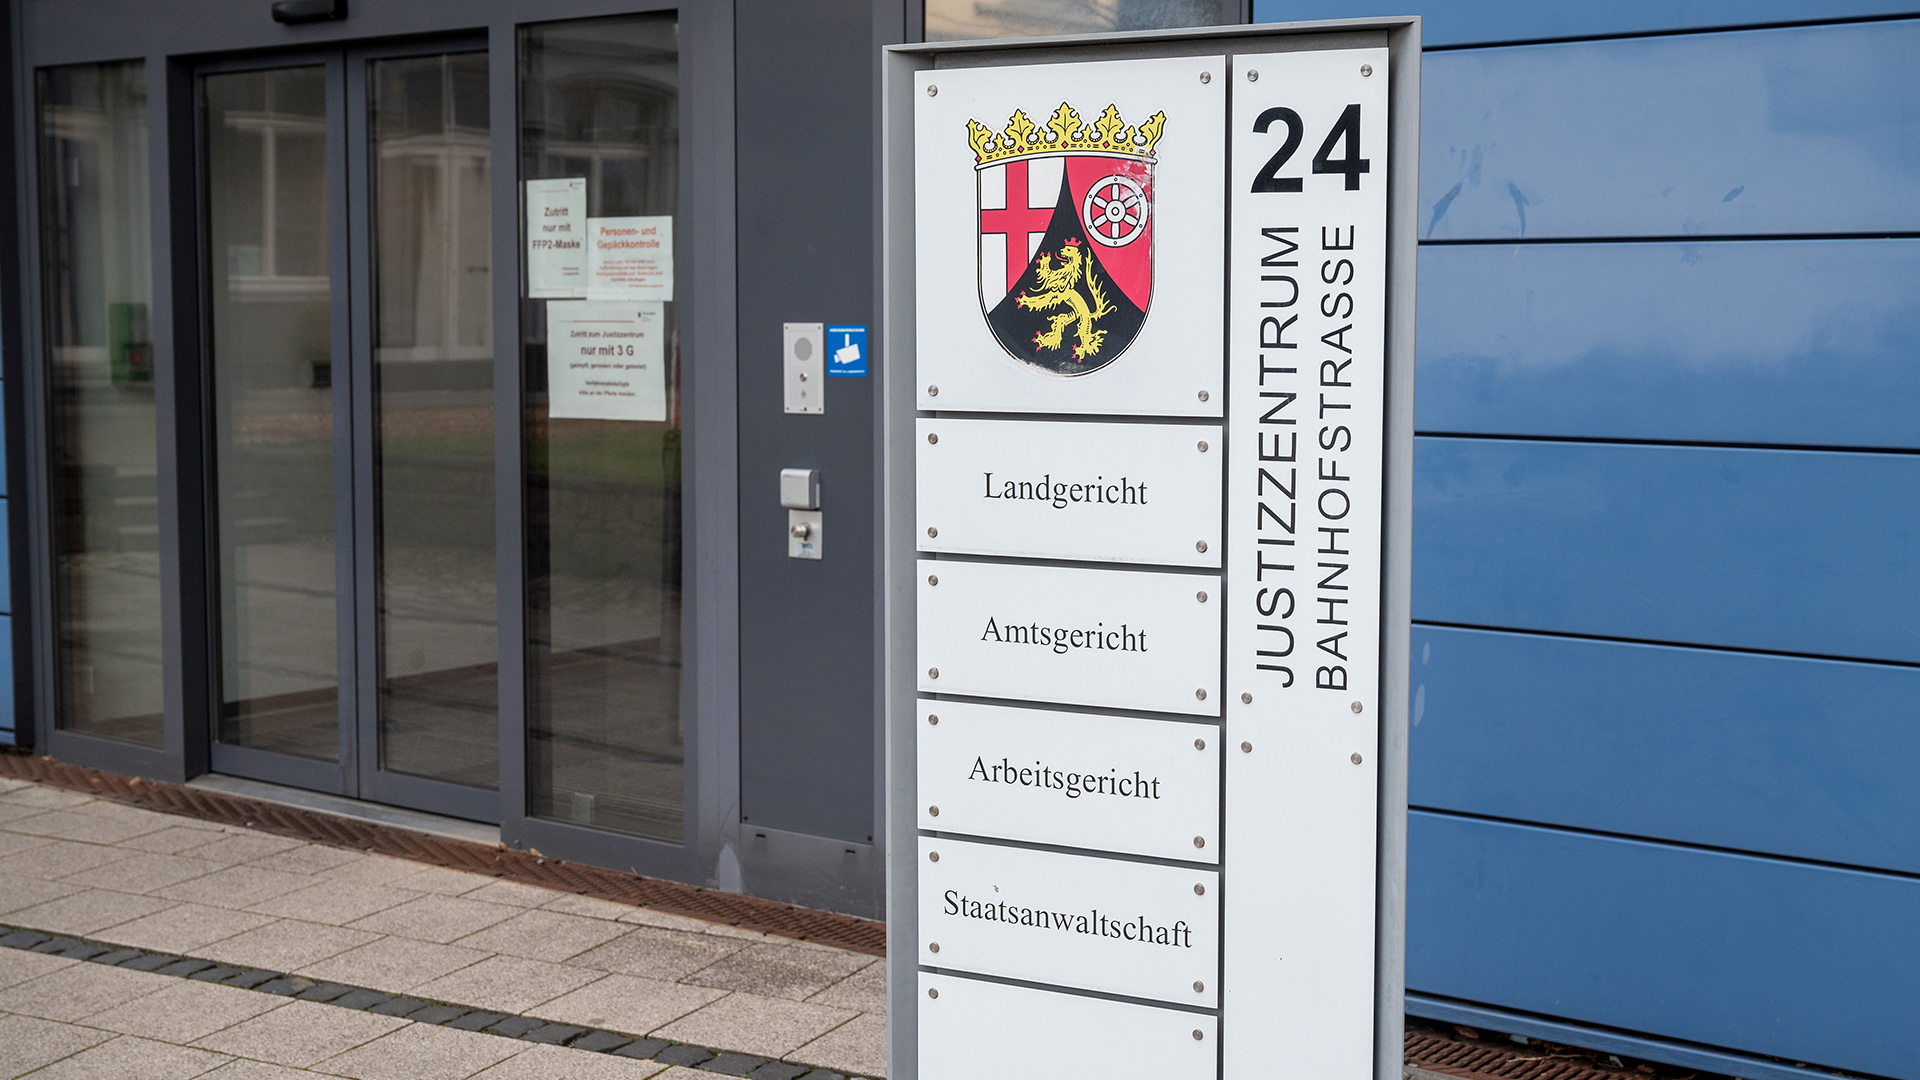 Eingang zum Landgericht Kaiserslautern | picture alliance/dpa